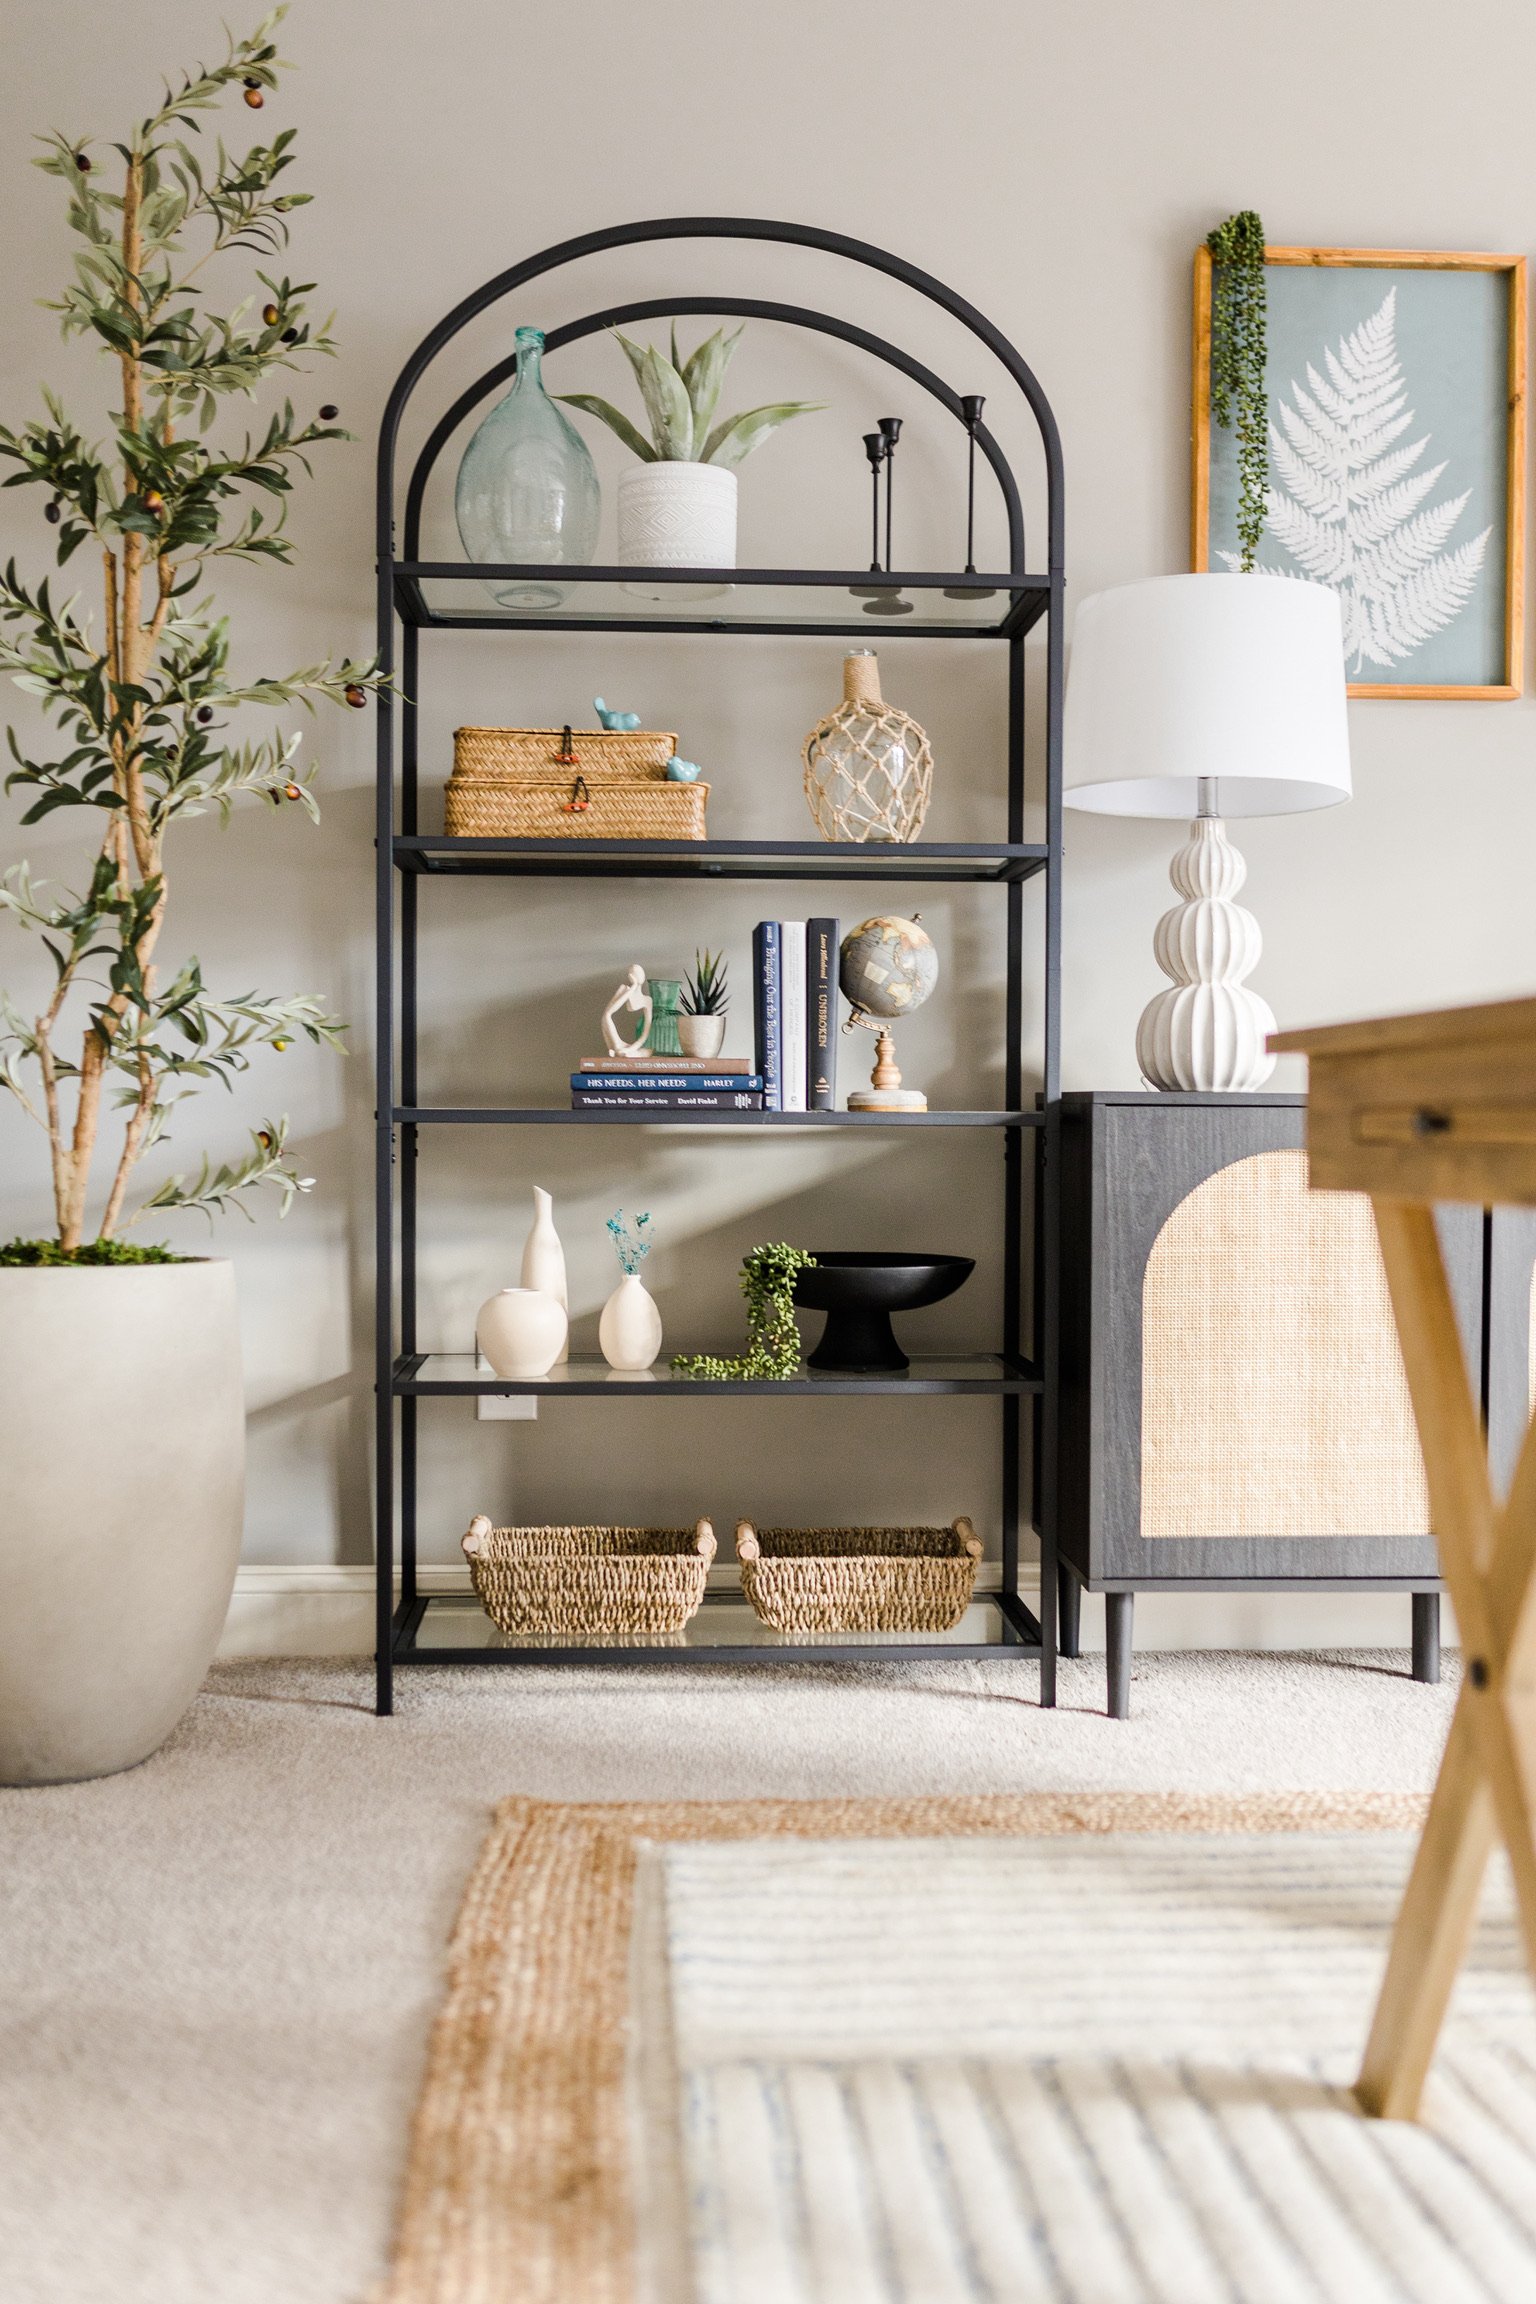 Bookshelf + interior design